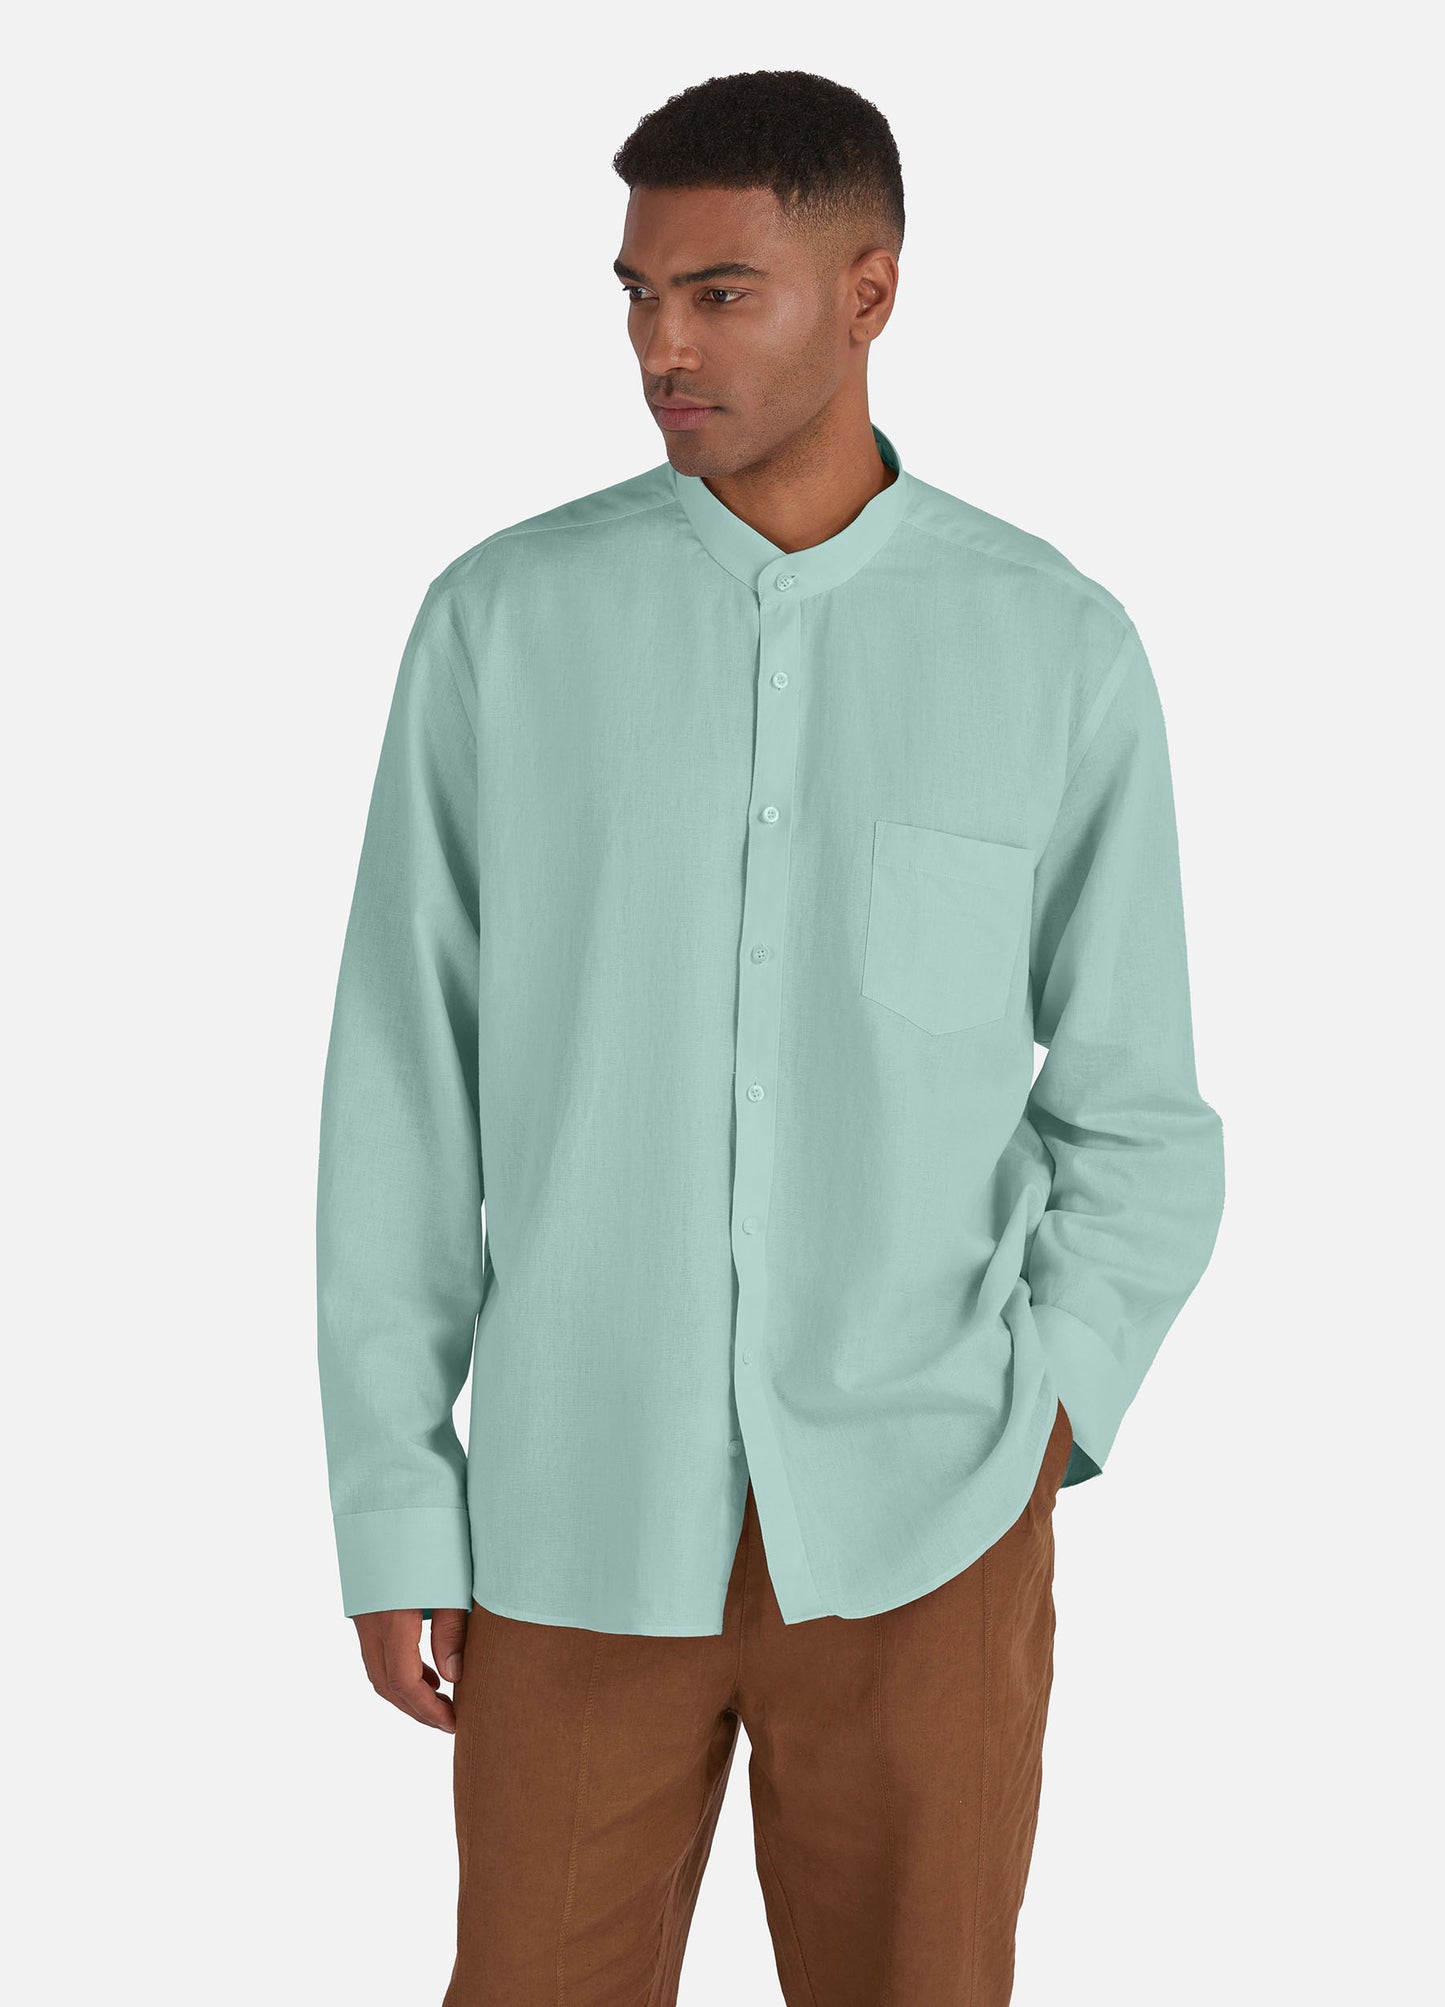 1PA1 Men's 100% Linen Henley Dress Shirts Button Down Plain Casual Shirts